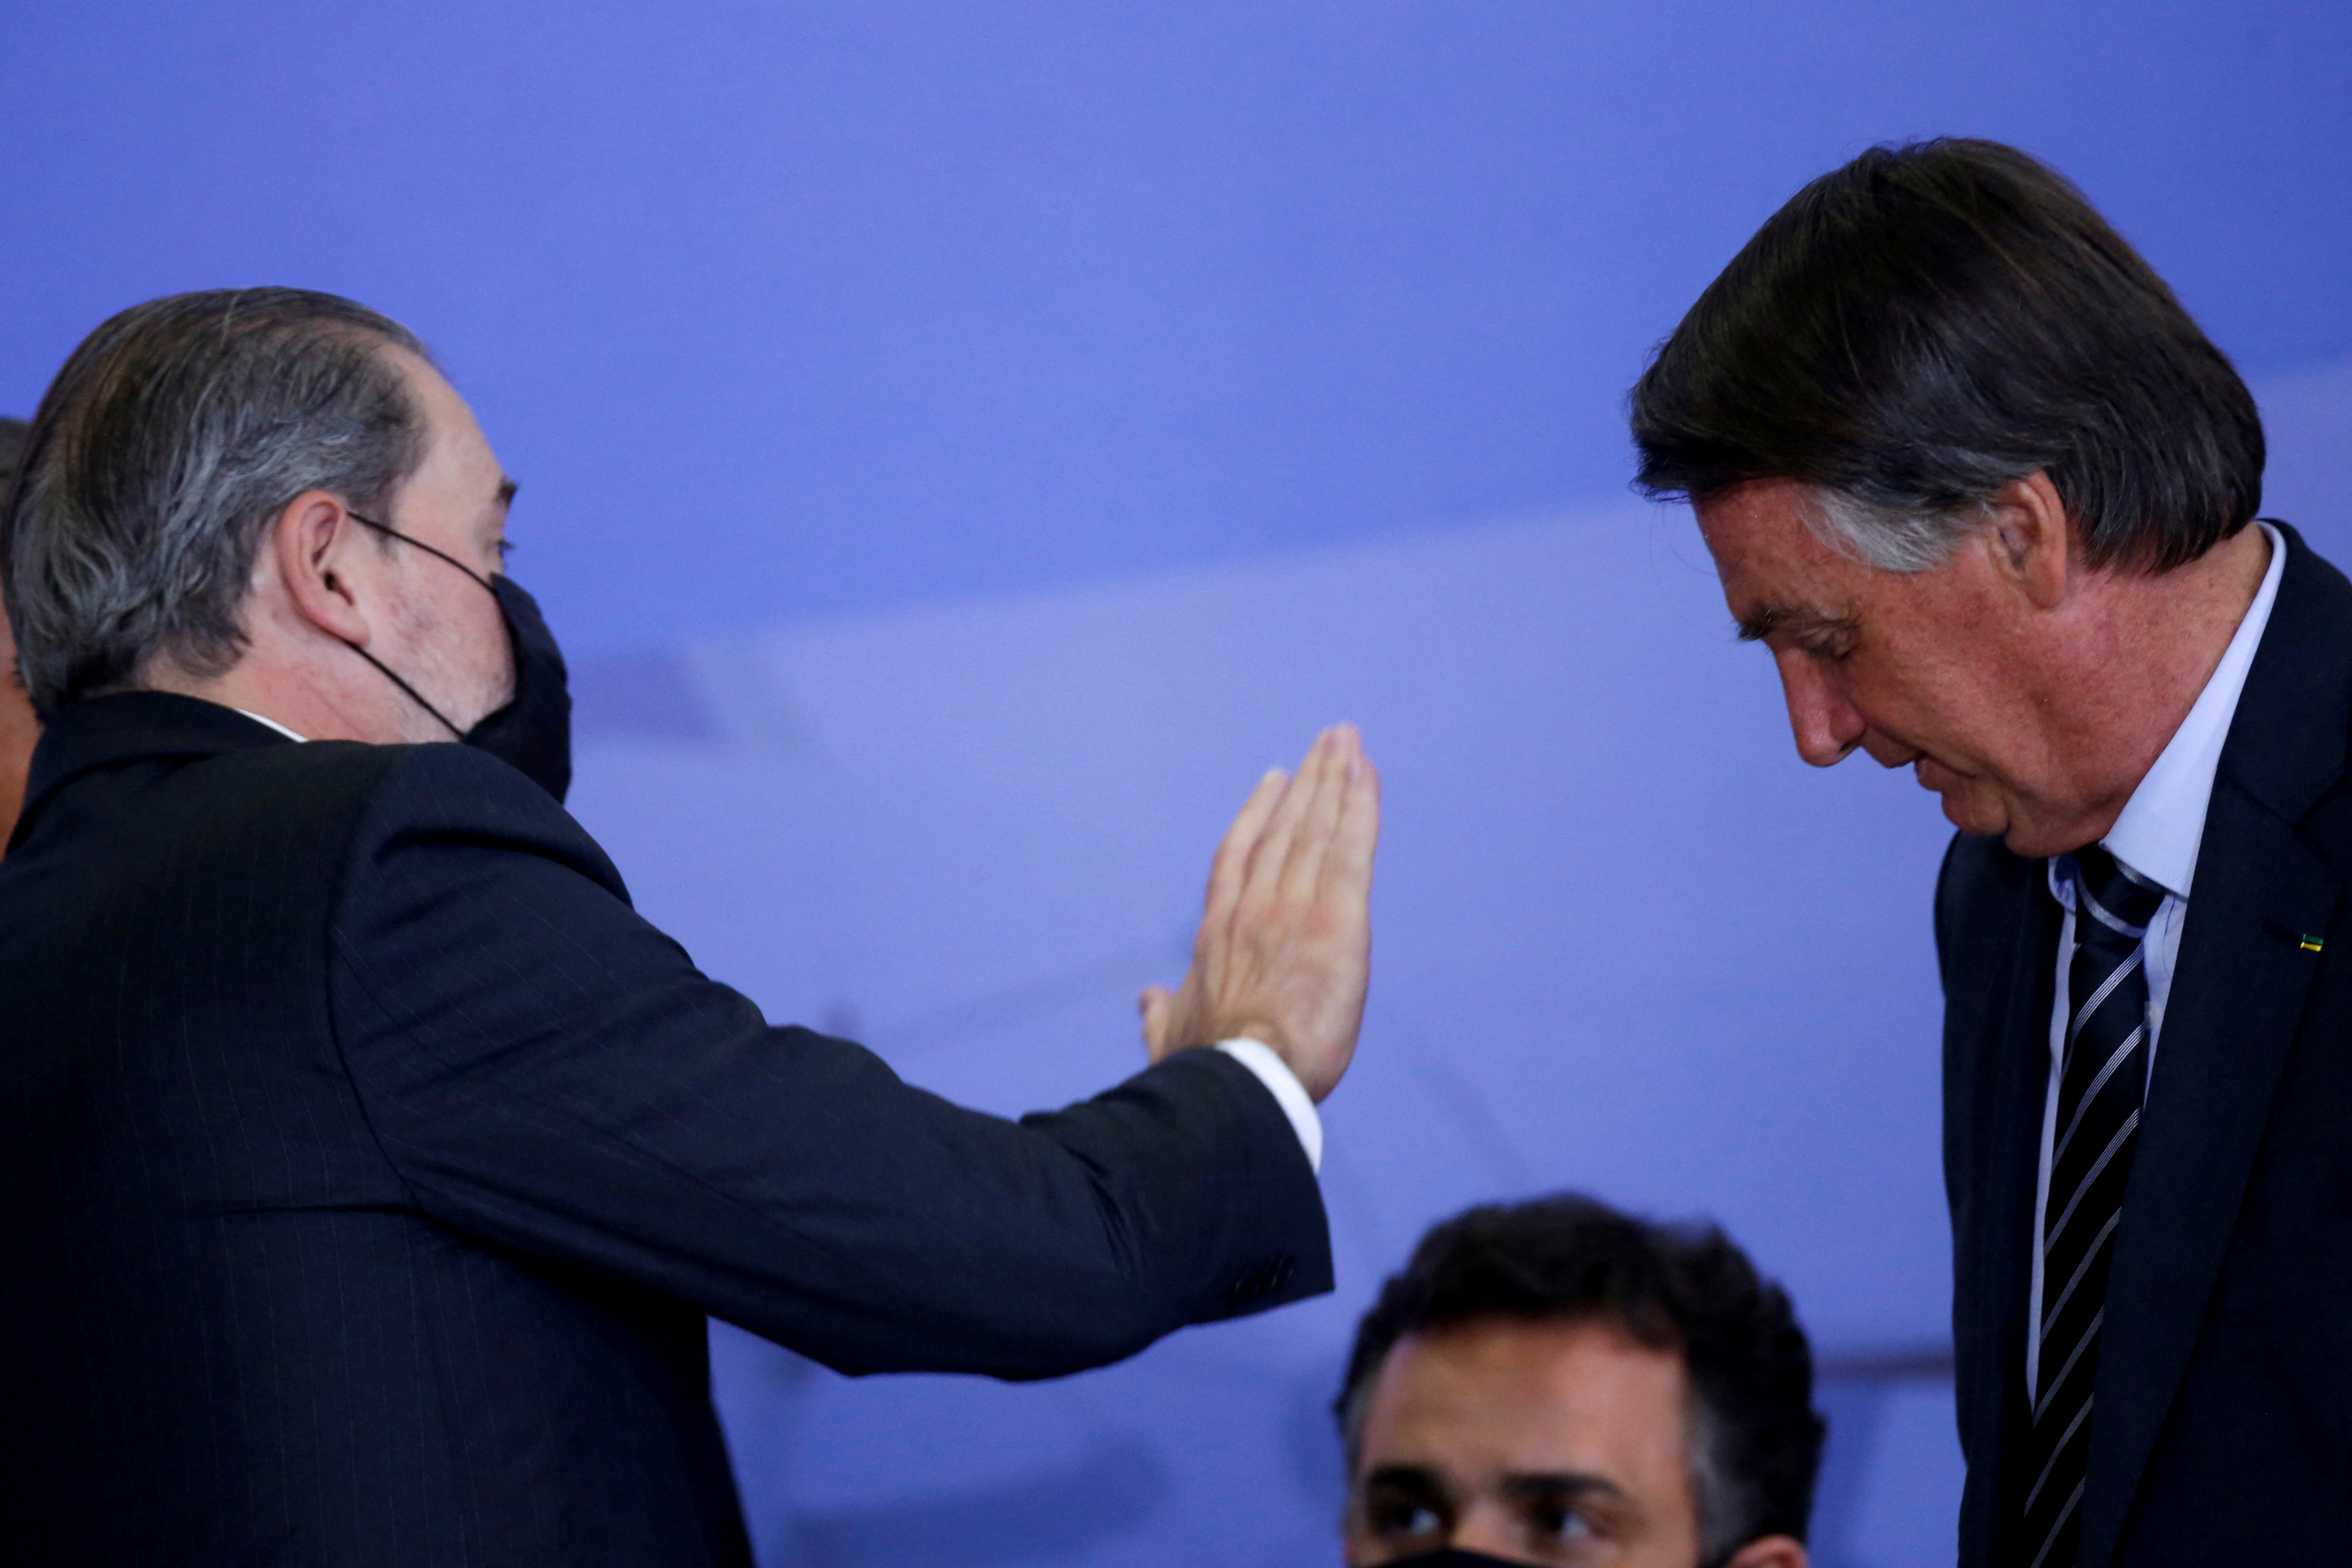 Brazil's Supreme Federal Court Judge Toffoli gestures towards Brazil's President Bolsonaro during a ceremony in Brasilia